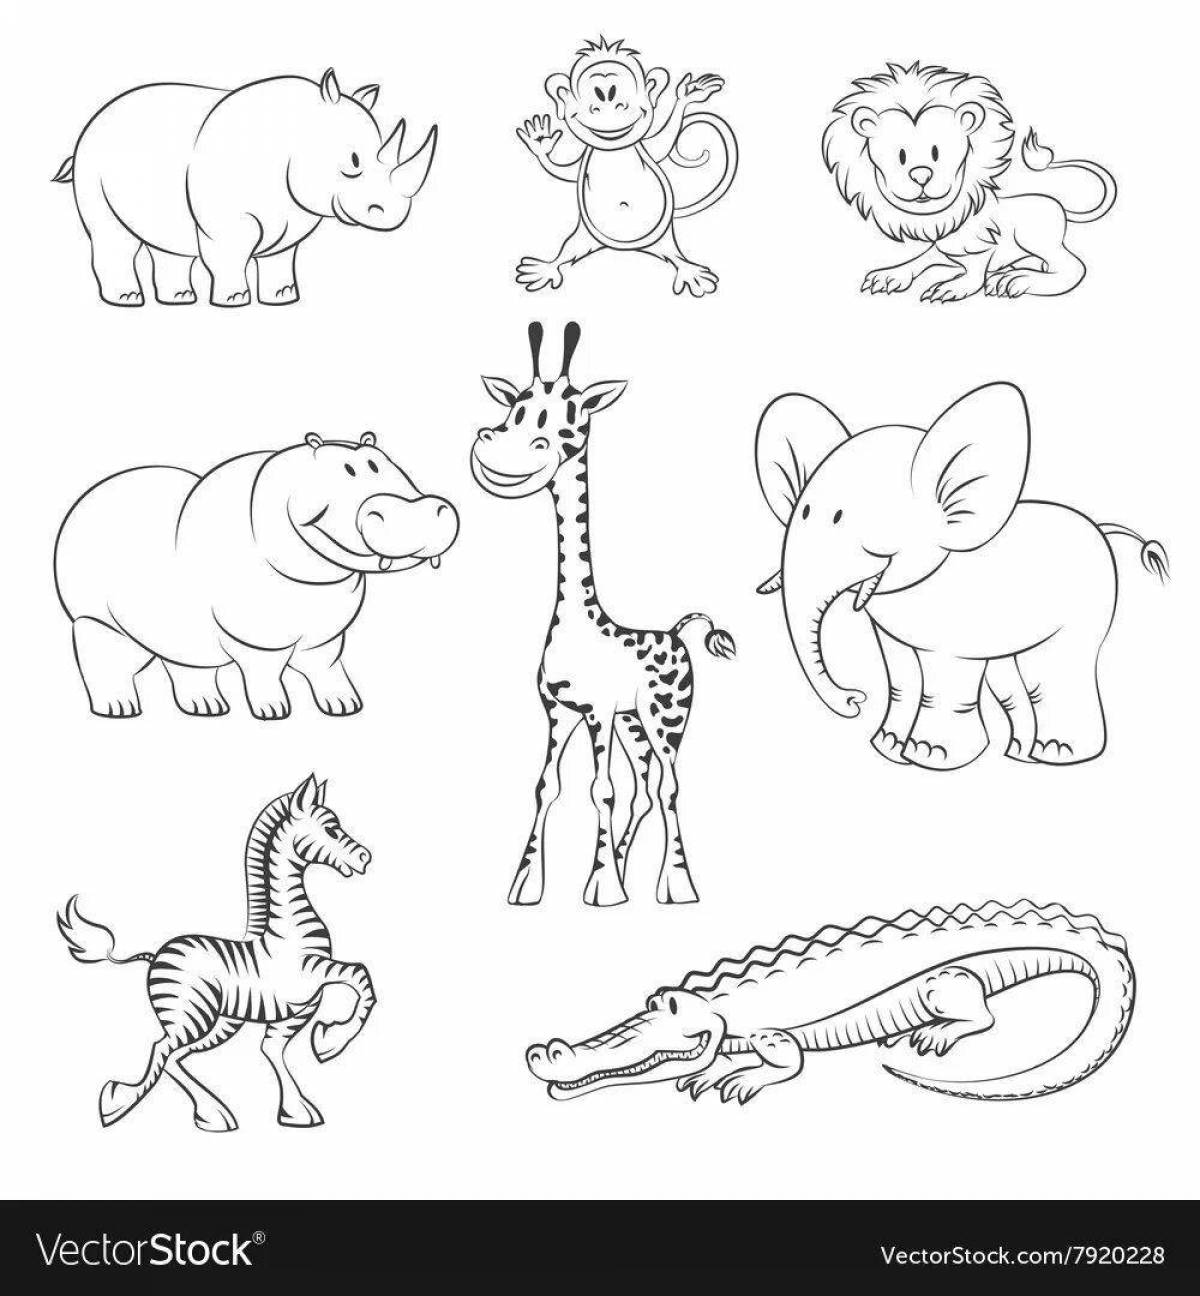 Fun coloring all animals